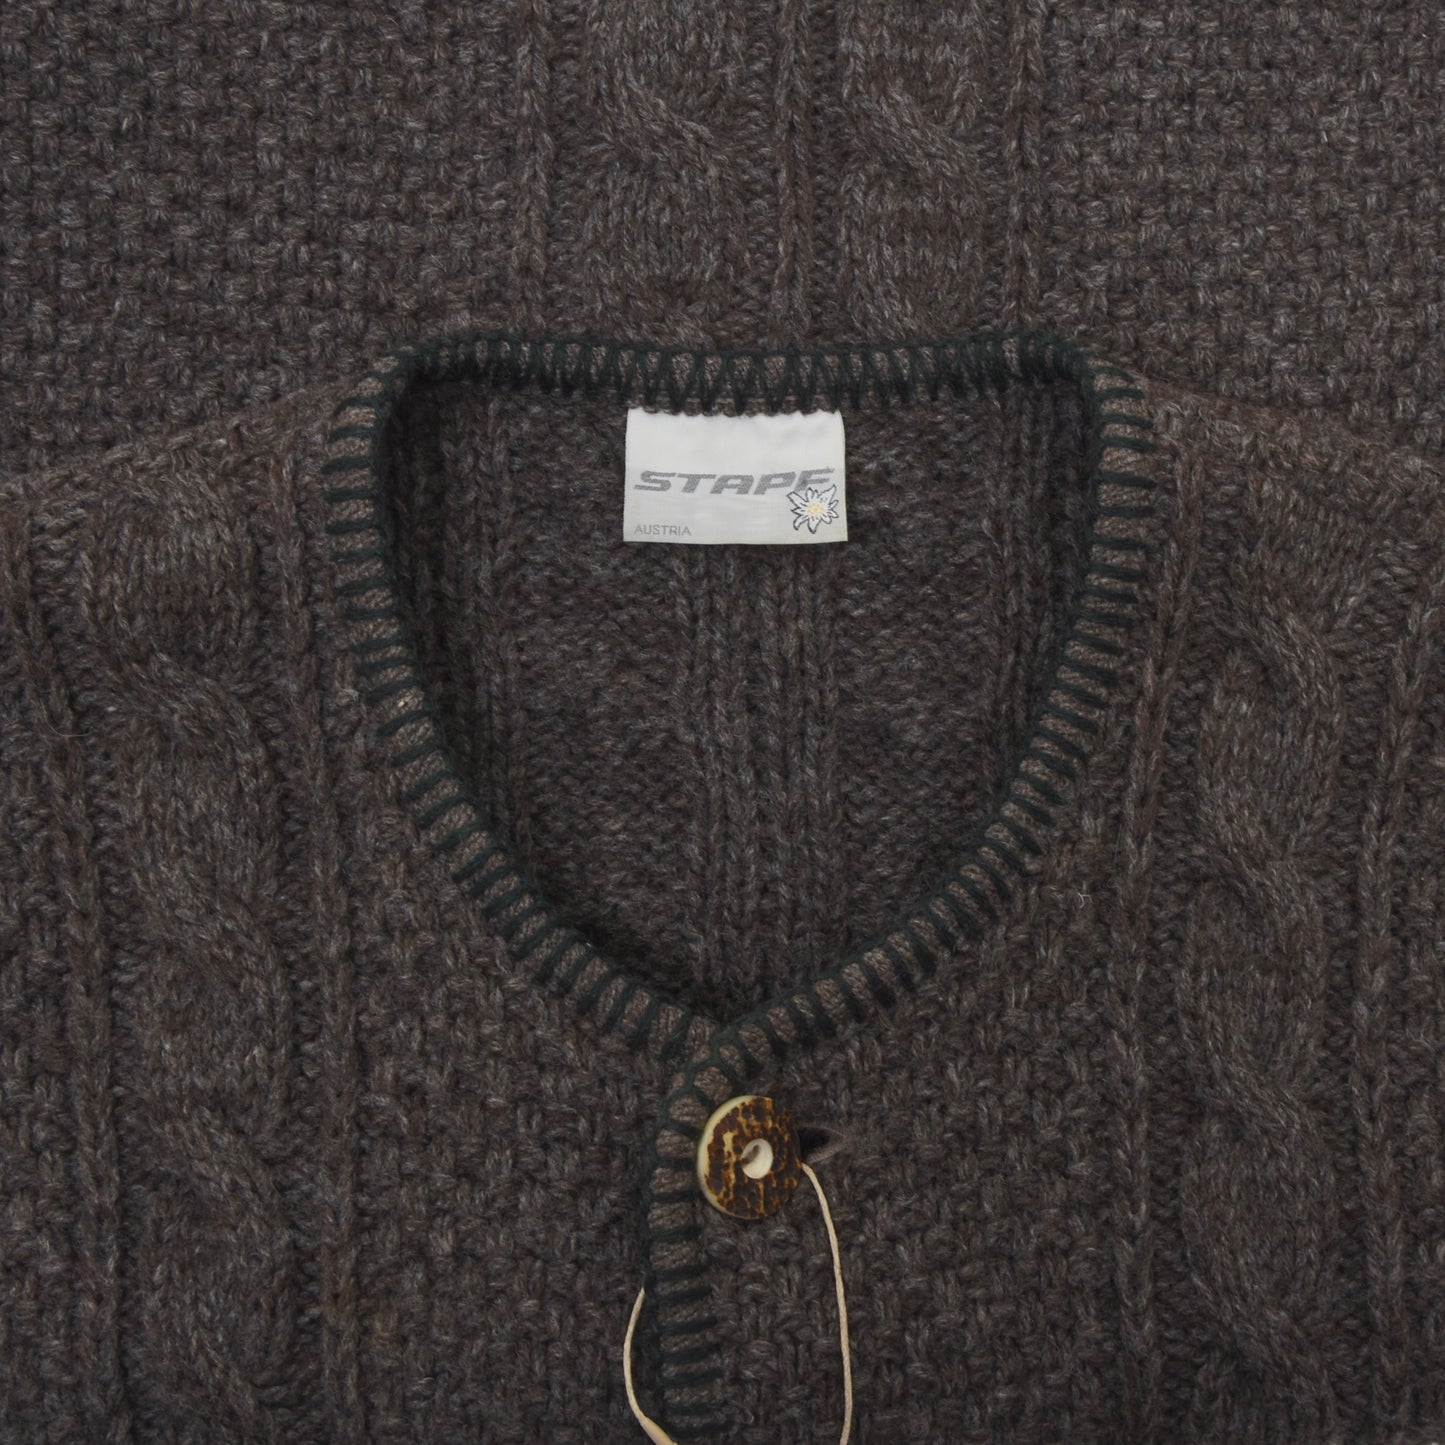 Stapf Austria Trachten Wool Cardigan Sweater Size 52 - Brown-Grey